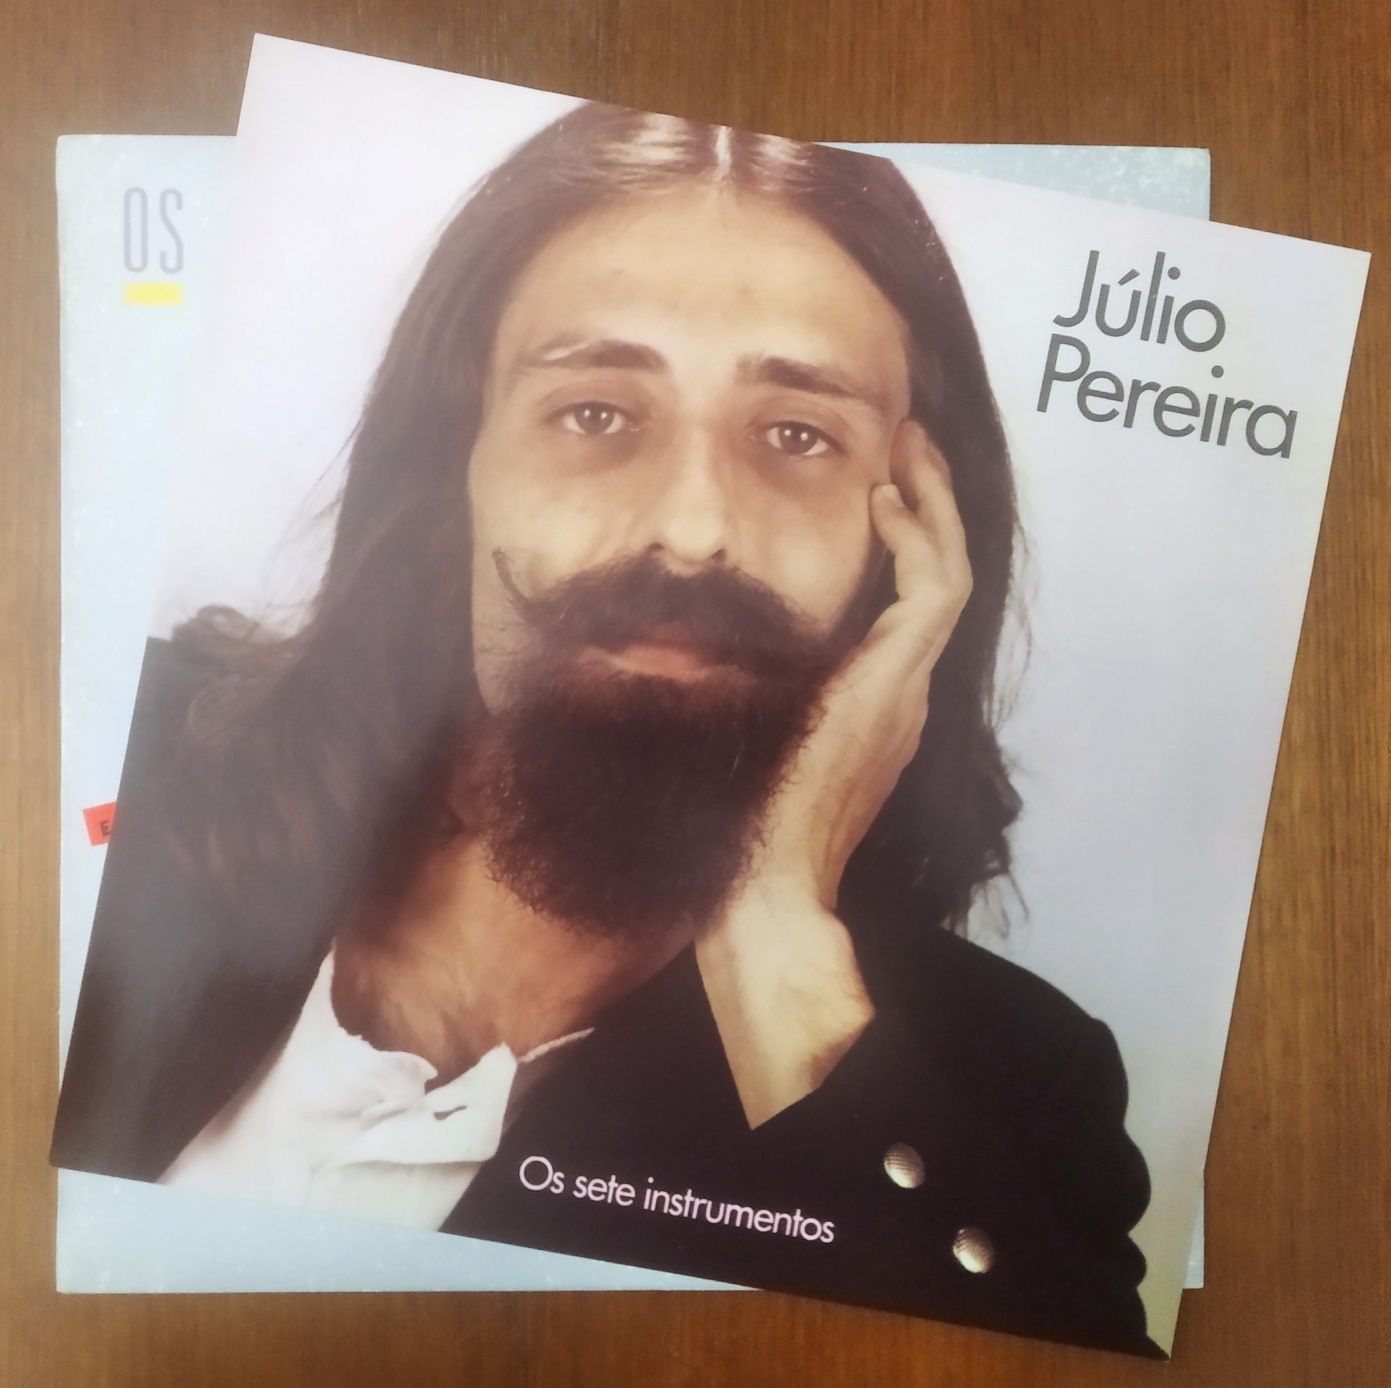 Júlio Pereira disco de vinil "Os Sete Instrumentos"